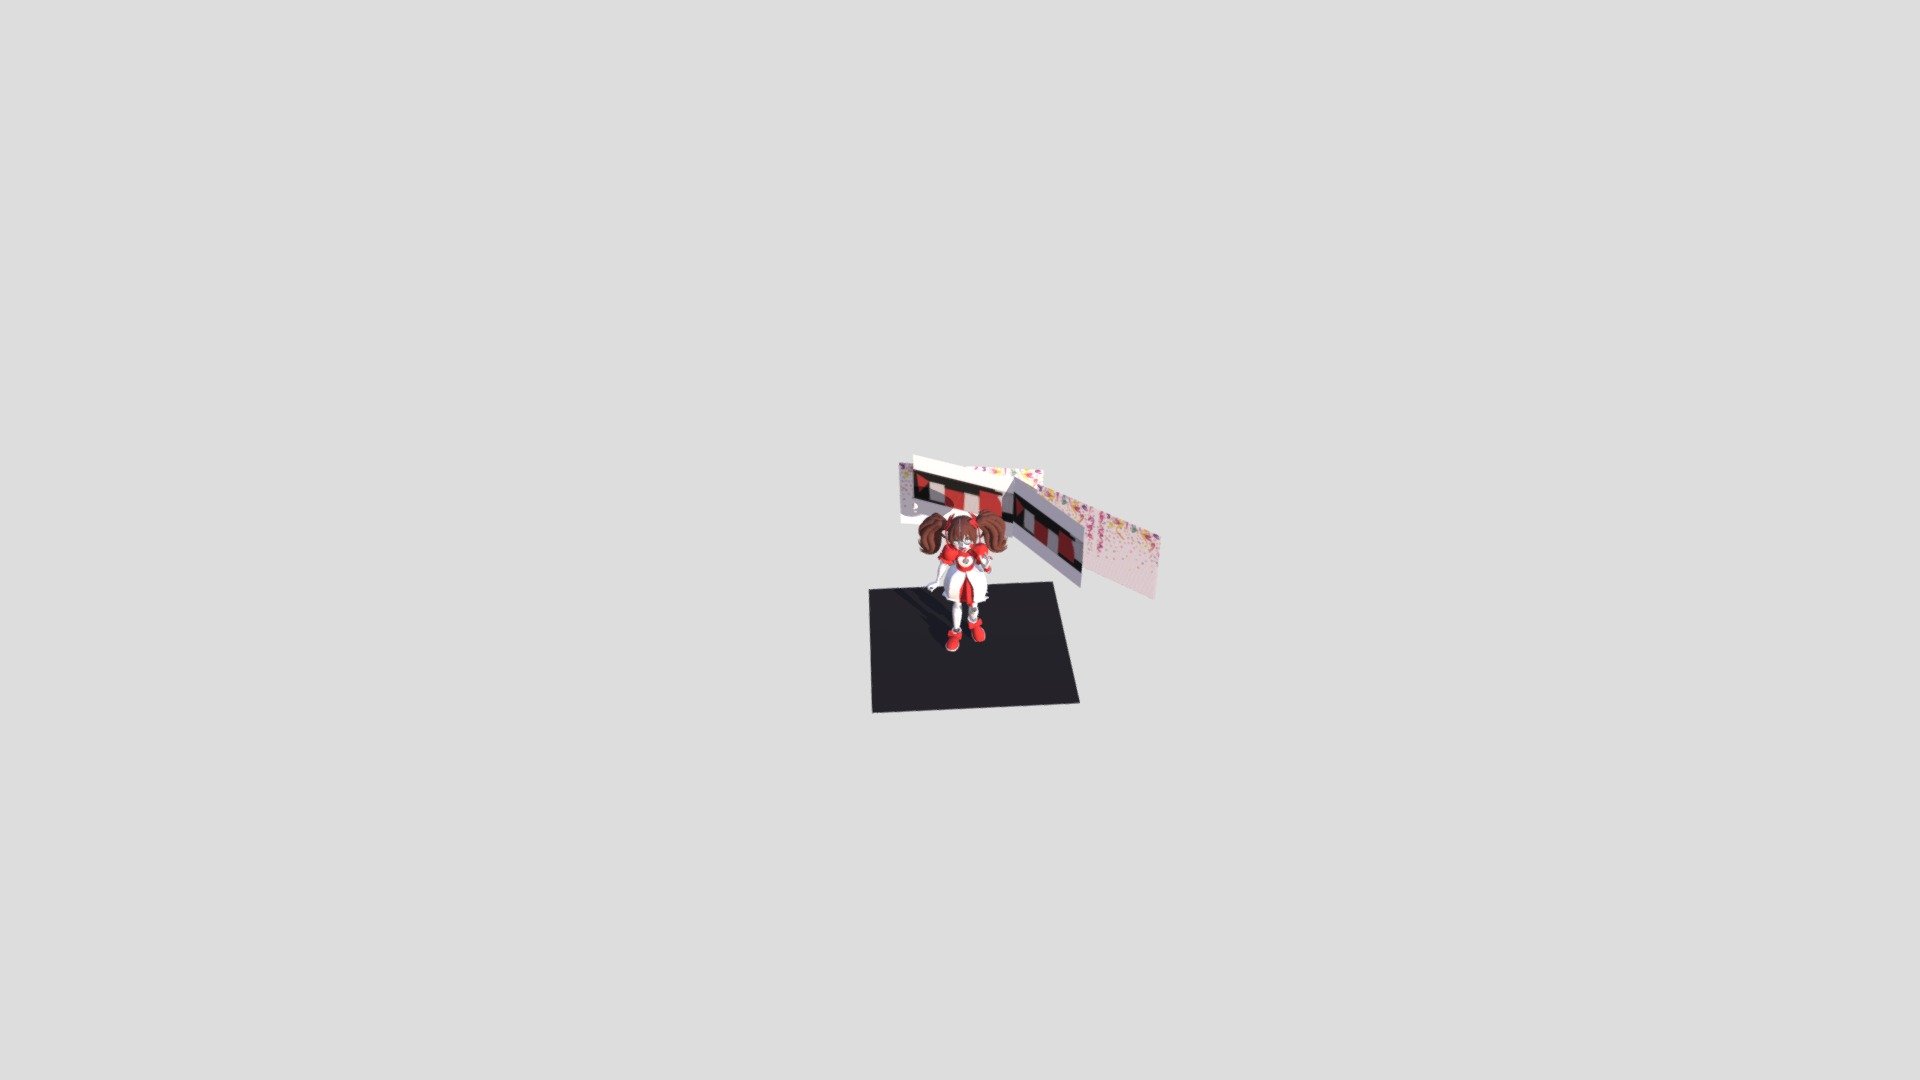 Qutiix Stylised Circus Baby Sister Location - Download Free 3D model by  Qutiix (@joshiisshh) [24f1433]